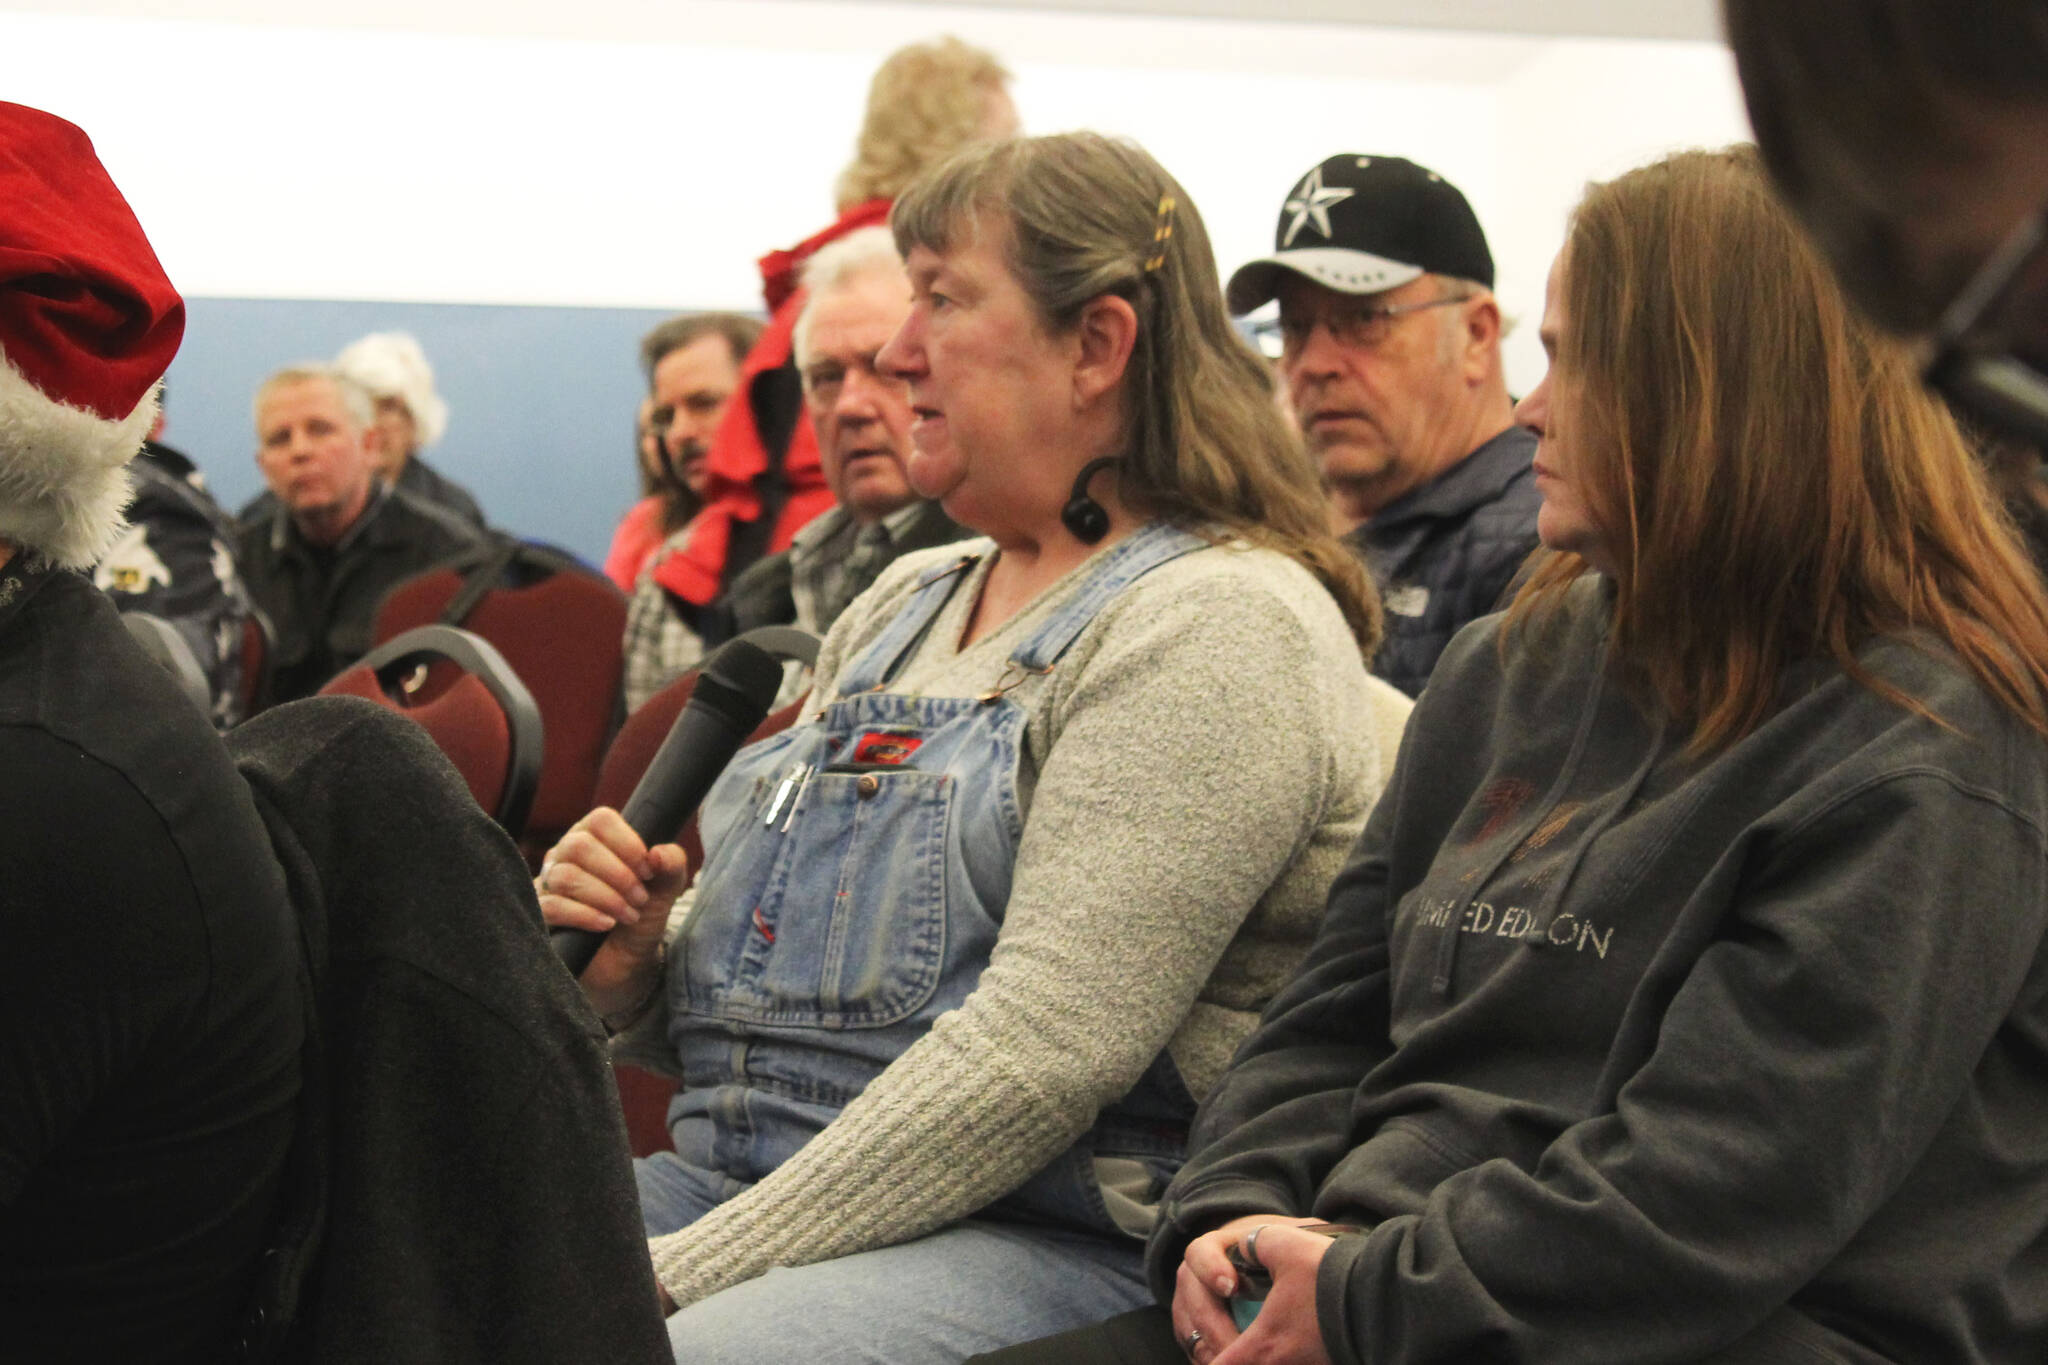 Nikiski resident Wenda Kennedy speaks during a community town hall on a cold weather shelter in Nikiski on Wednesday, Dec. 15, 2021 in Nikiski, Alaska. (Ashlyn O’Hara/Peninsula Clarion)